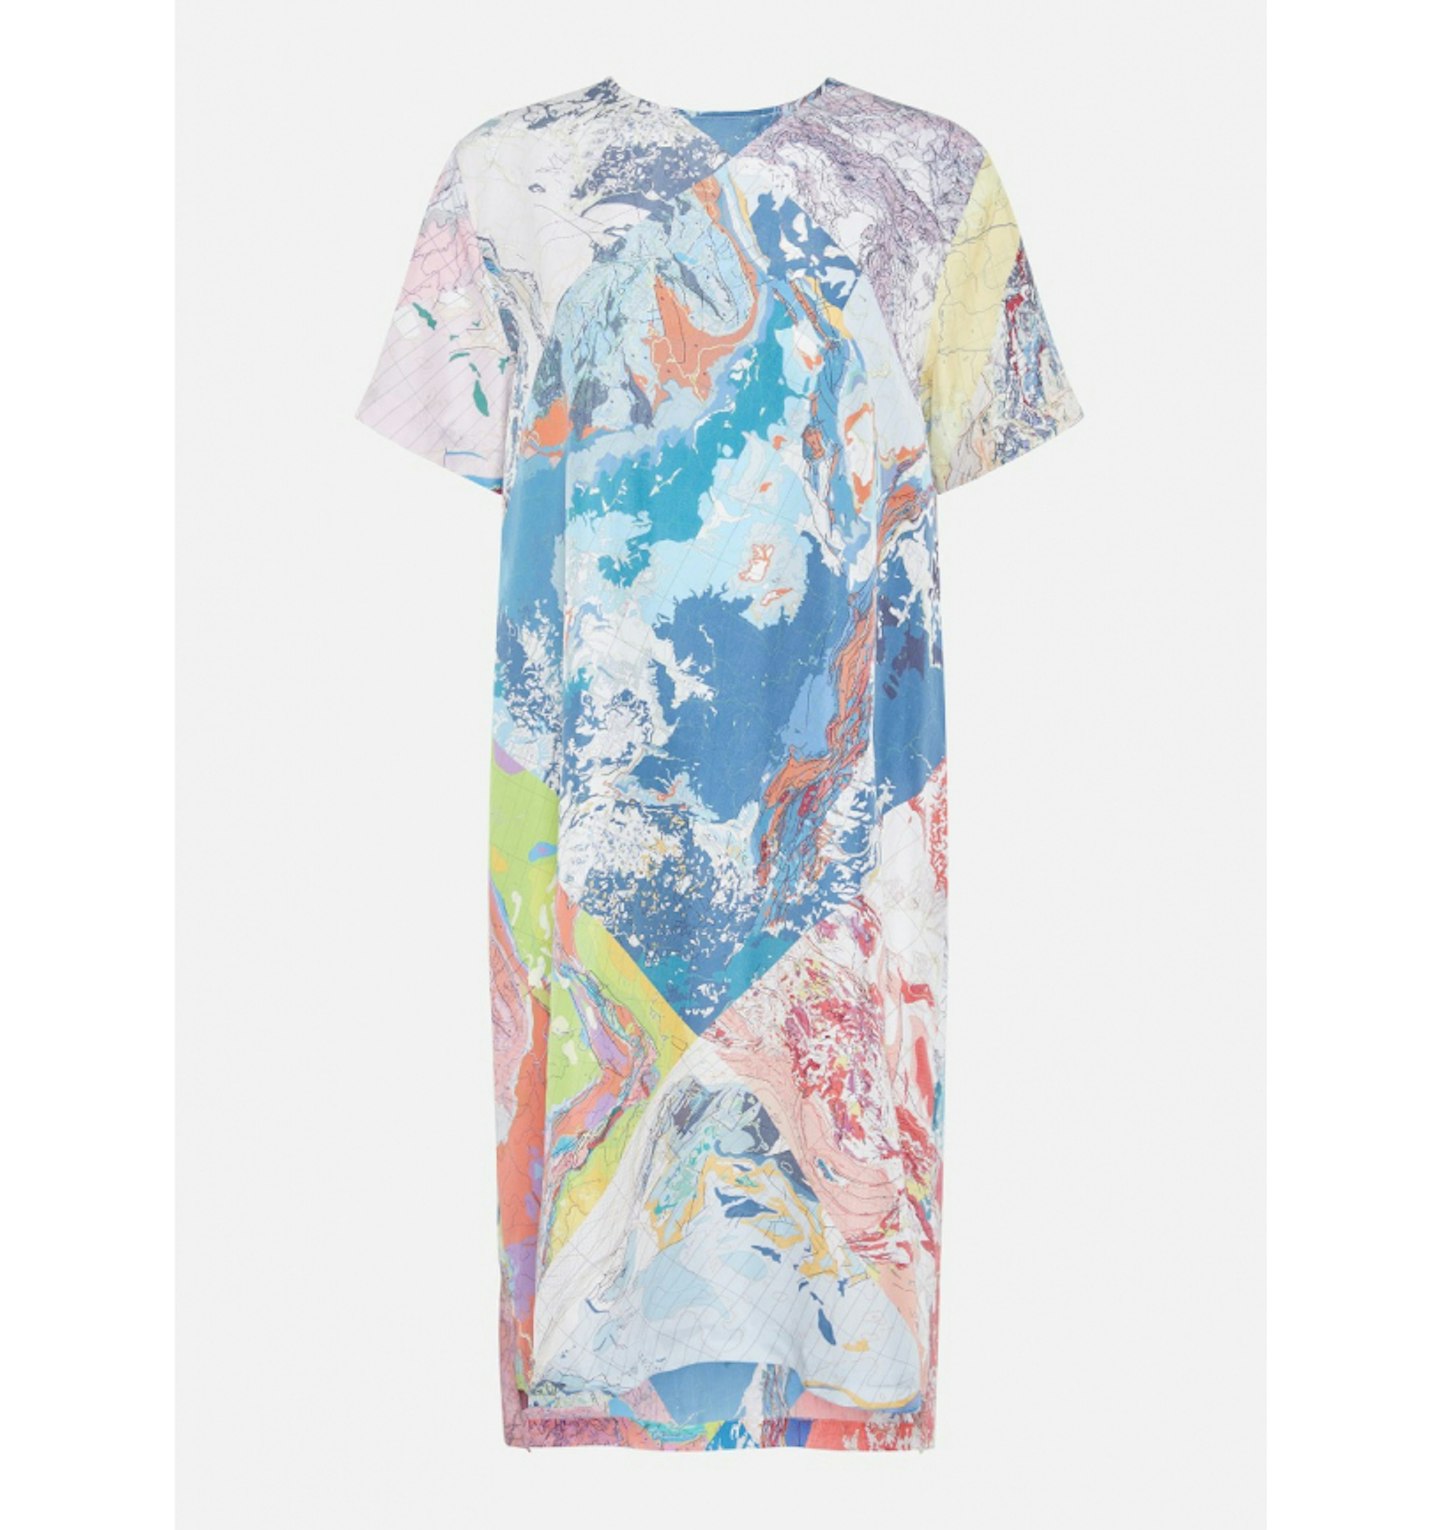 Christopher Raeburn, Multi Map T-shirt Dress, £275